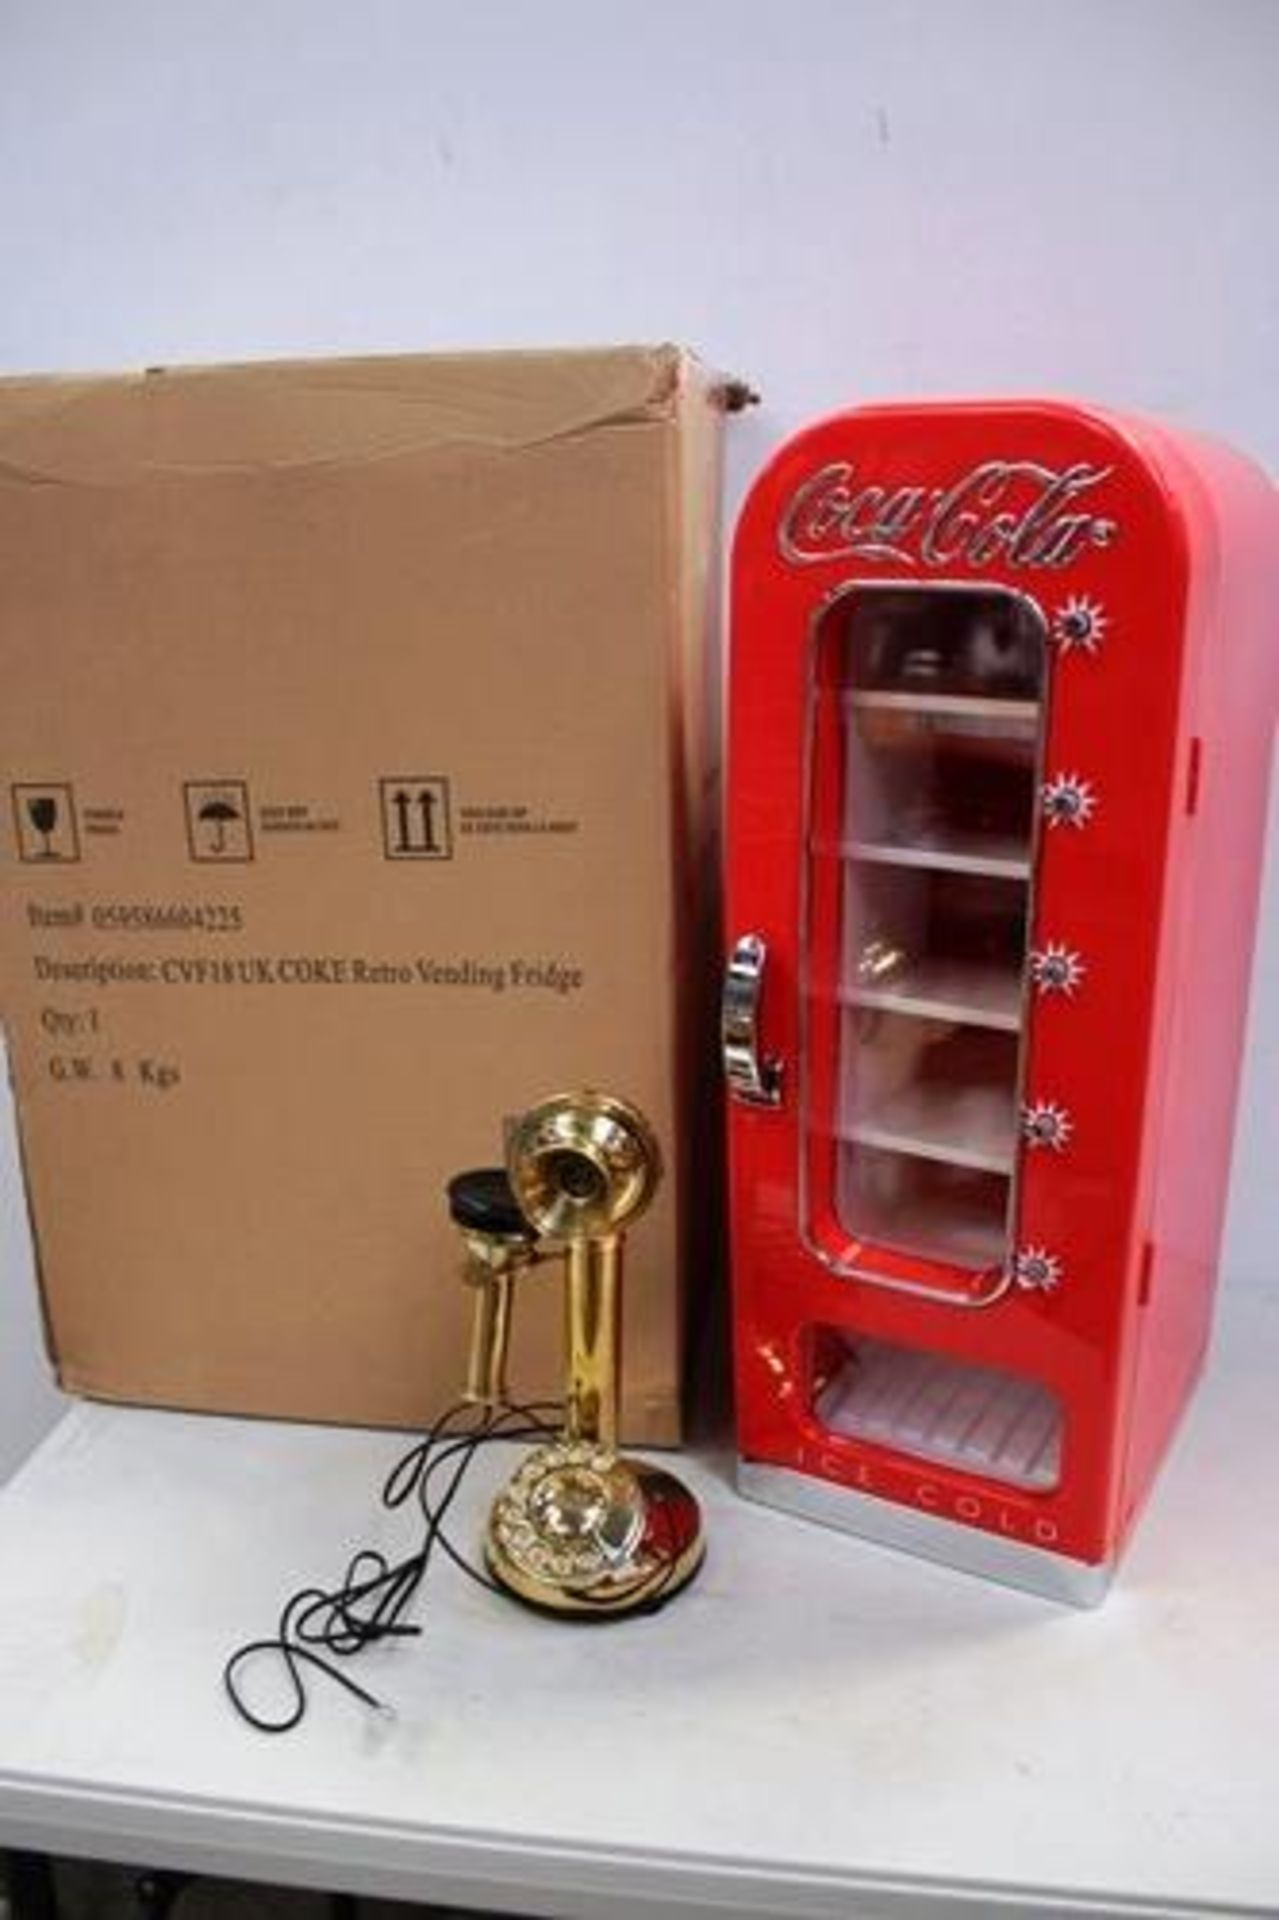 1 x retro style Coca-Cola can chiller, model CVF18, together with 1 x gold colour retro